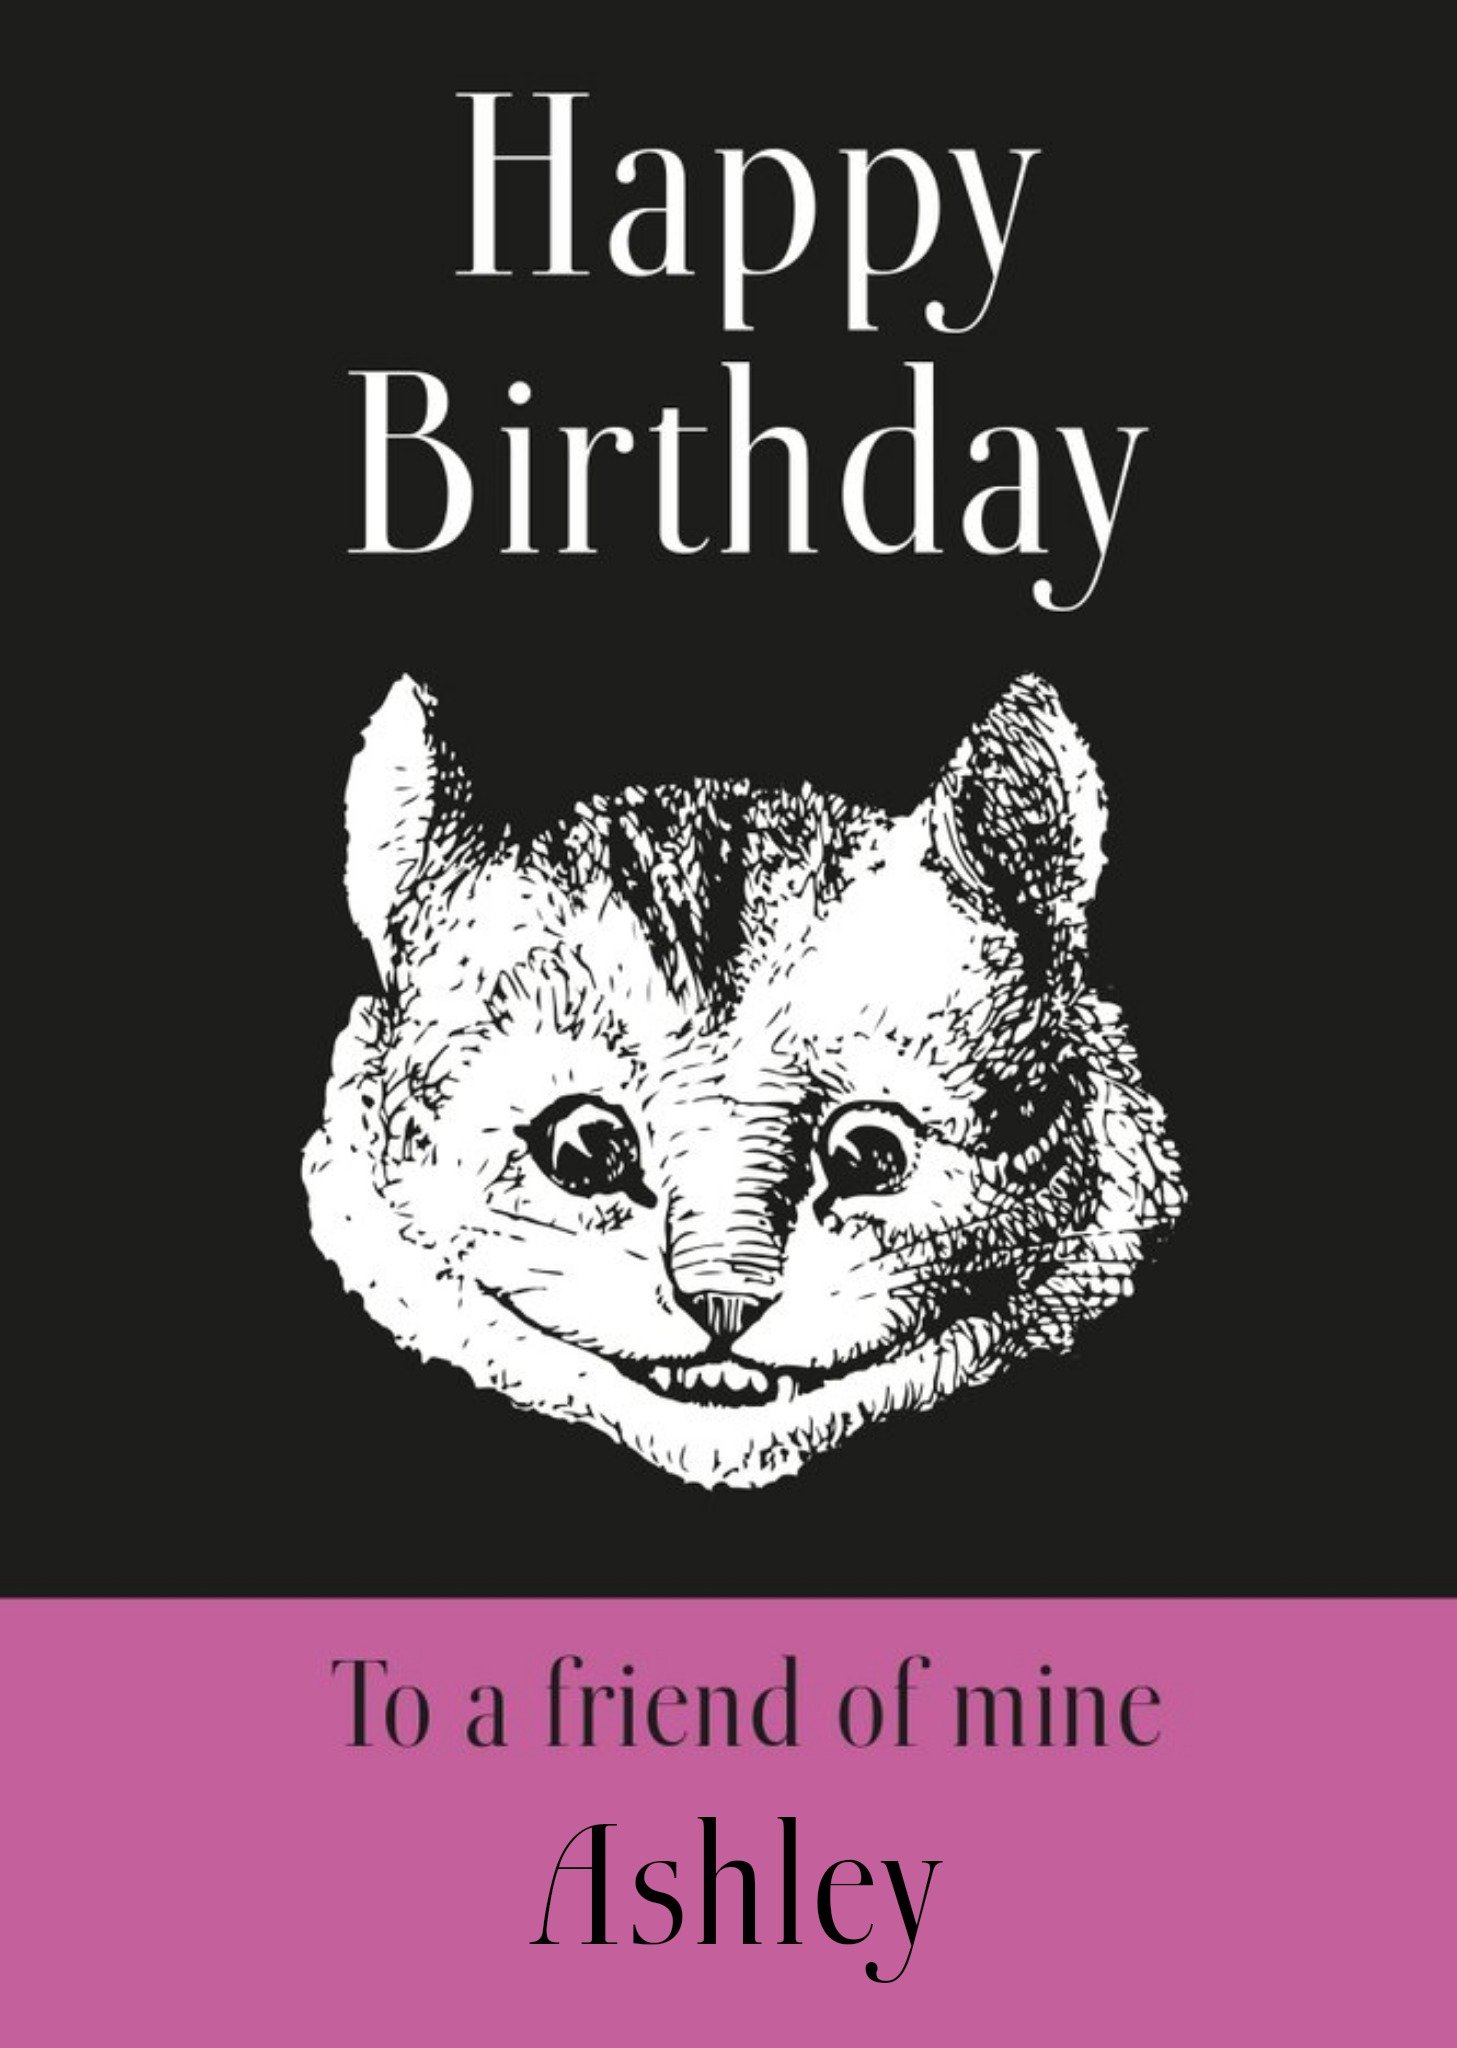 The V&a V&a Alice In Wonderland Illustration Cheshire Cat Birthday Card Ecard